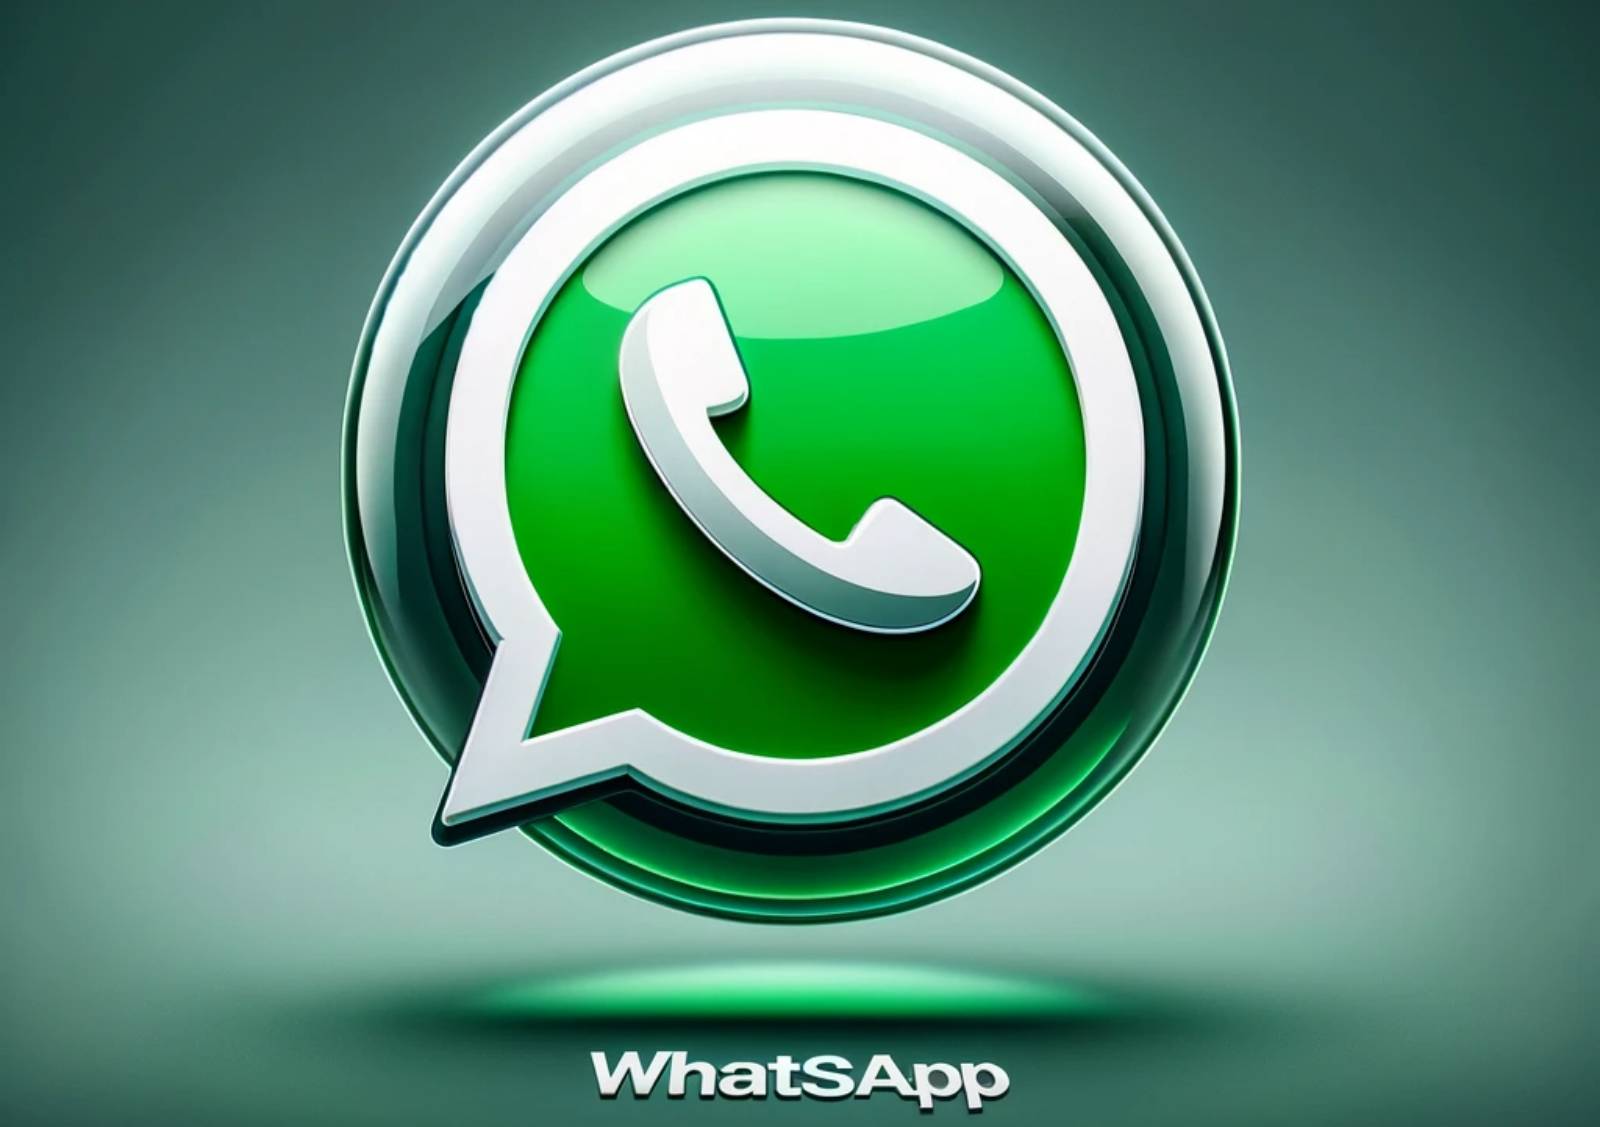 WhatsApp positionering